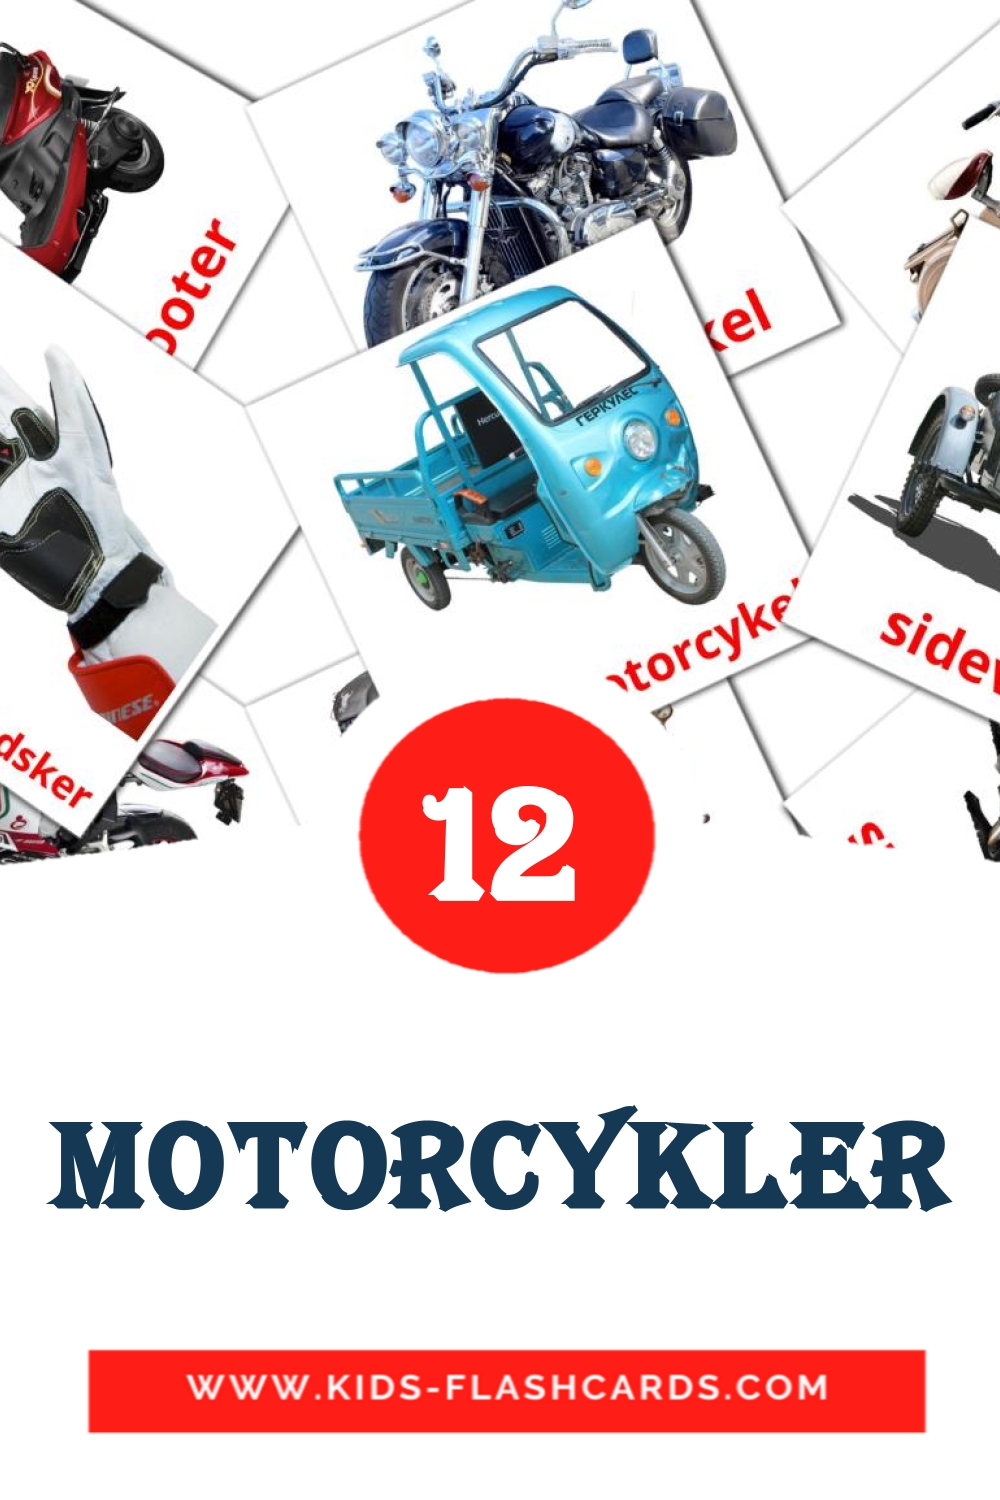 14 Motorcykler Picture Cards for Kindergarden in dansk